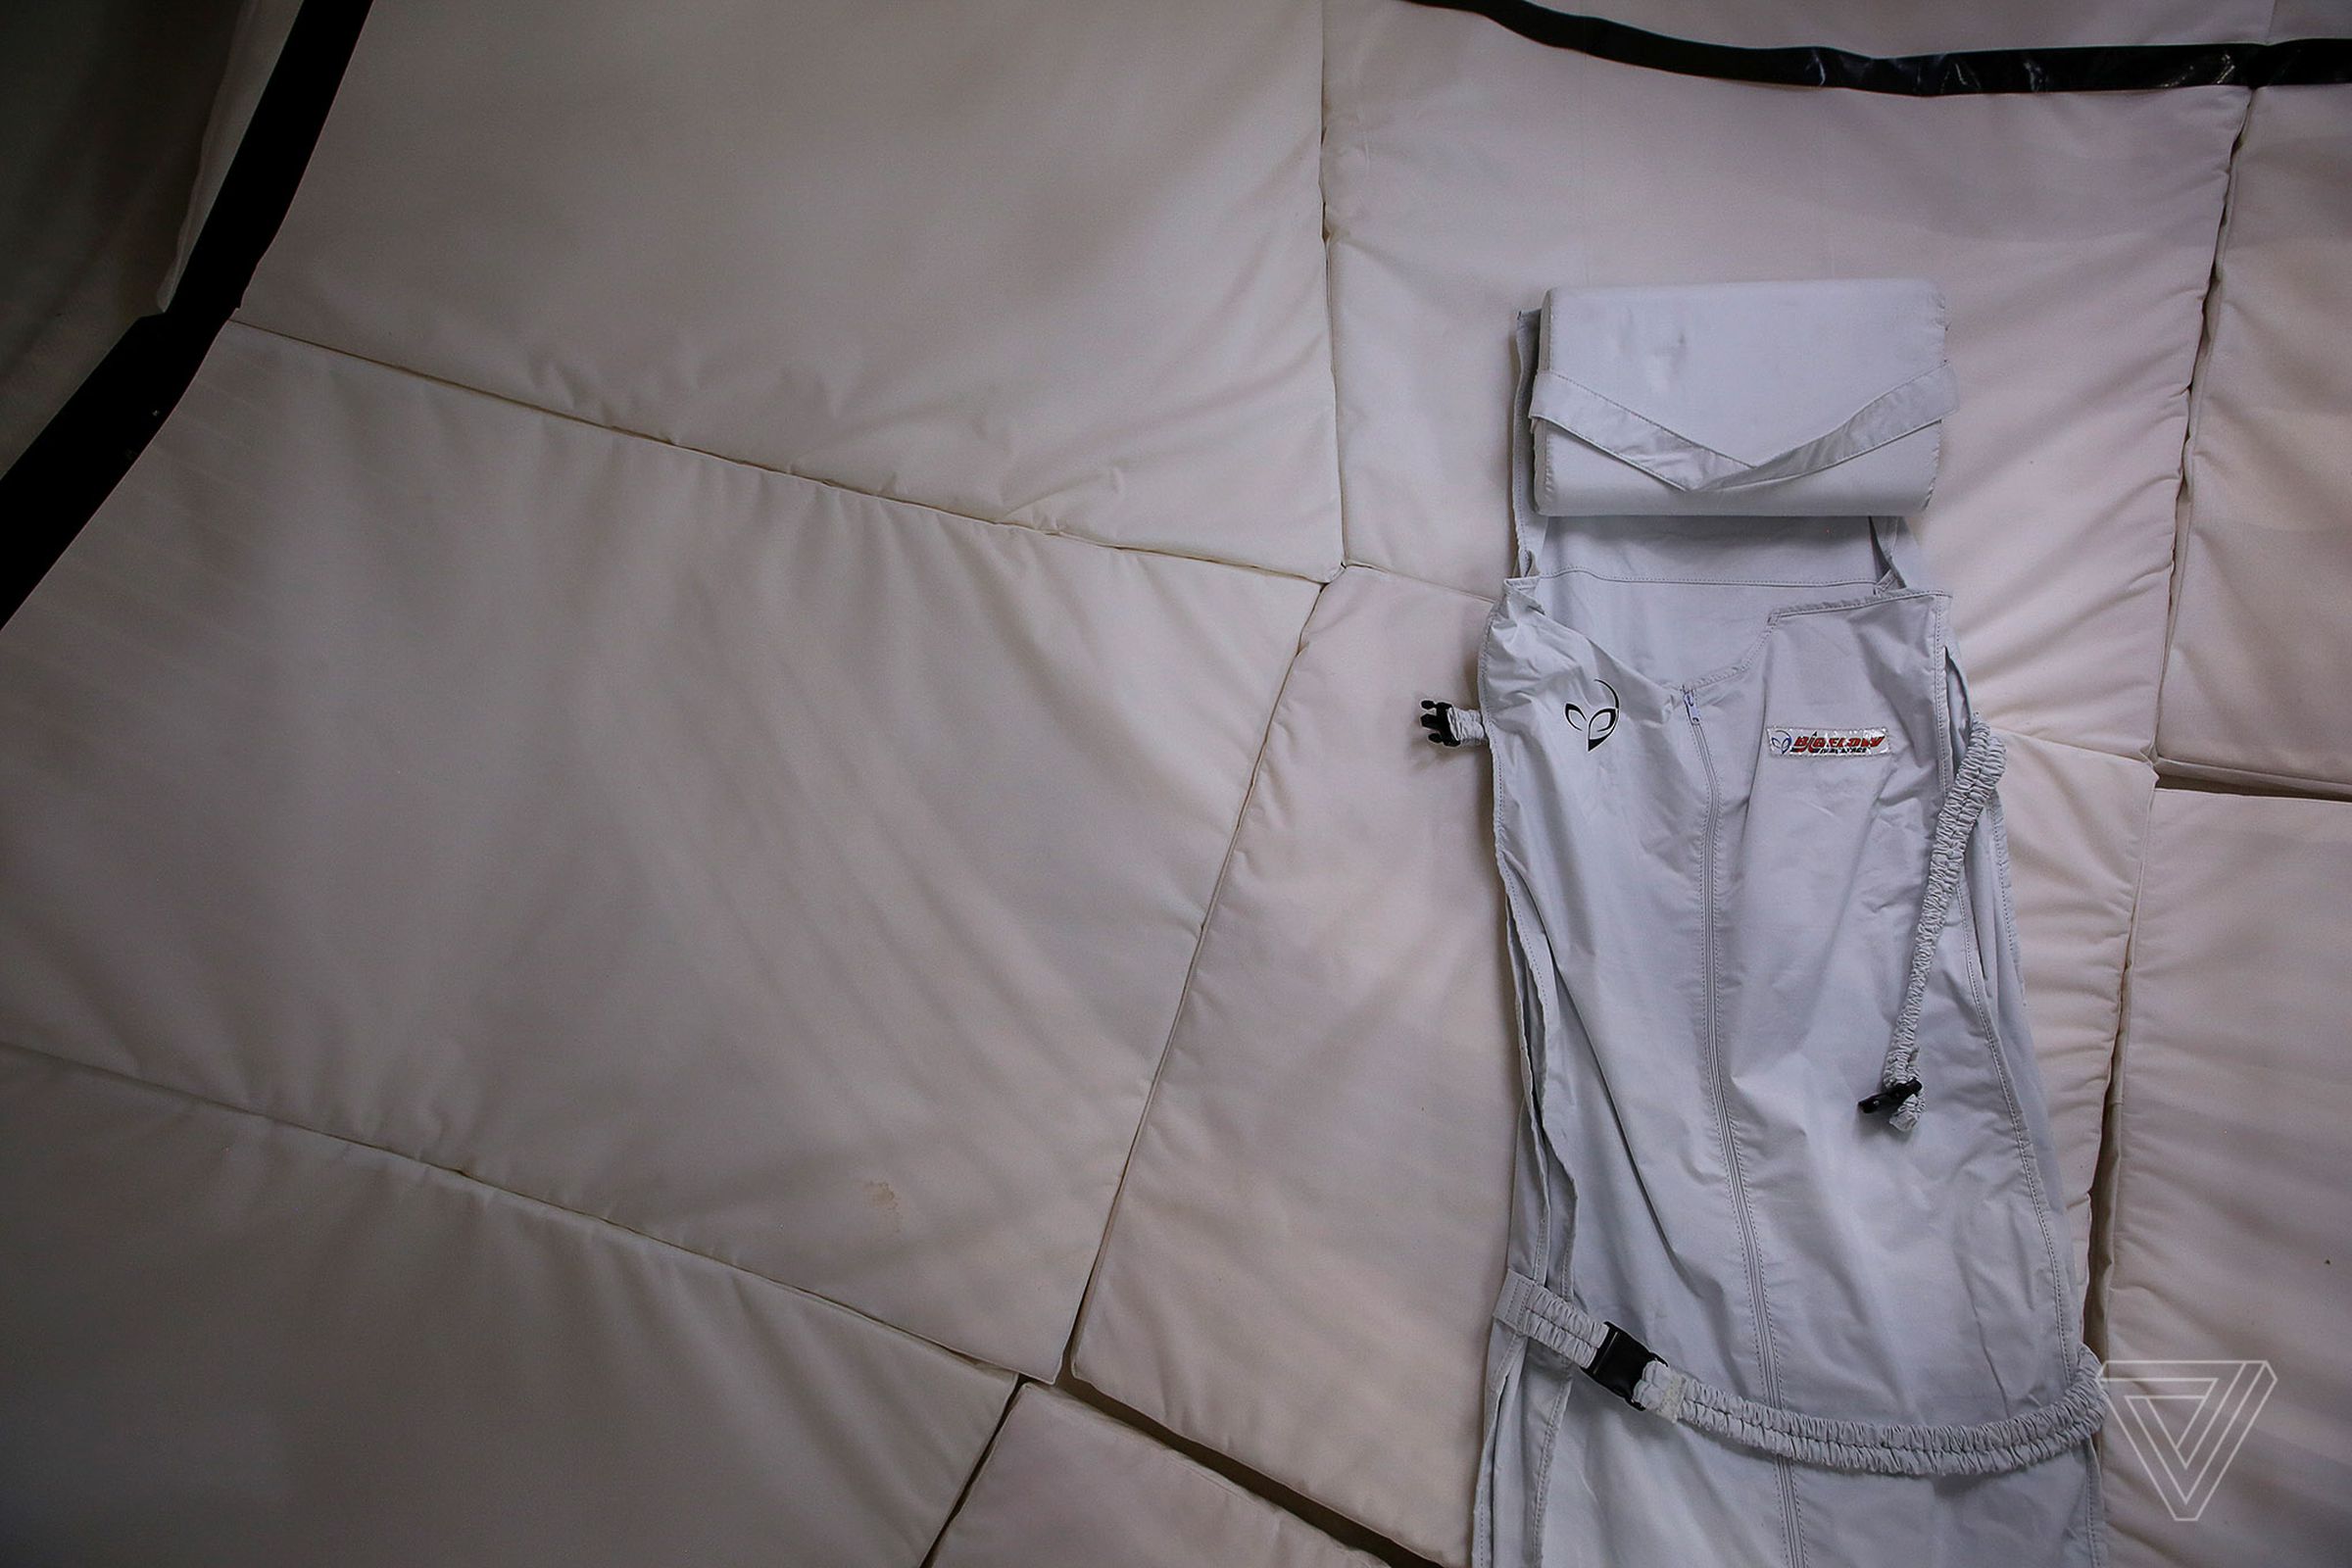 A sleeping bag for a future crew member.